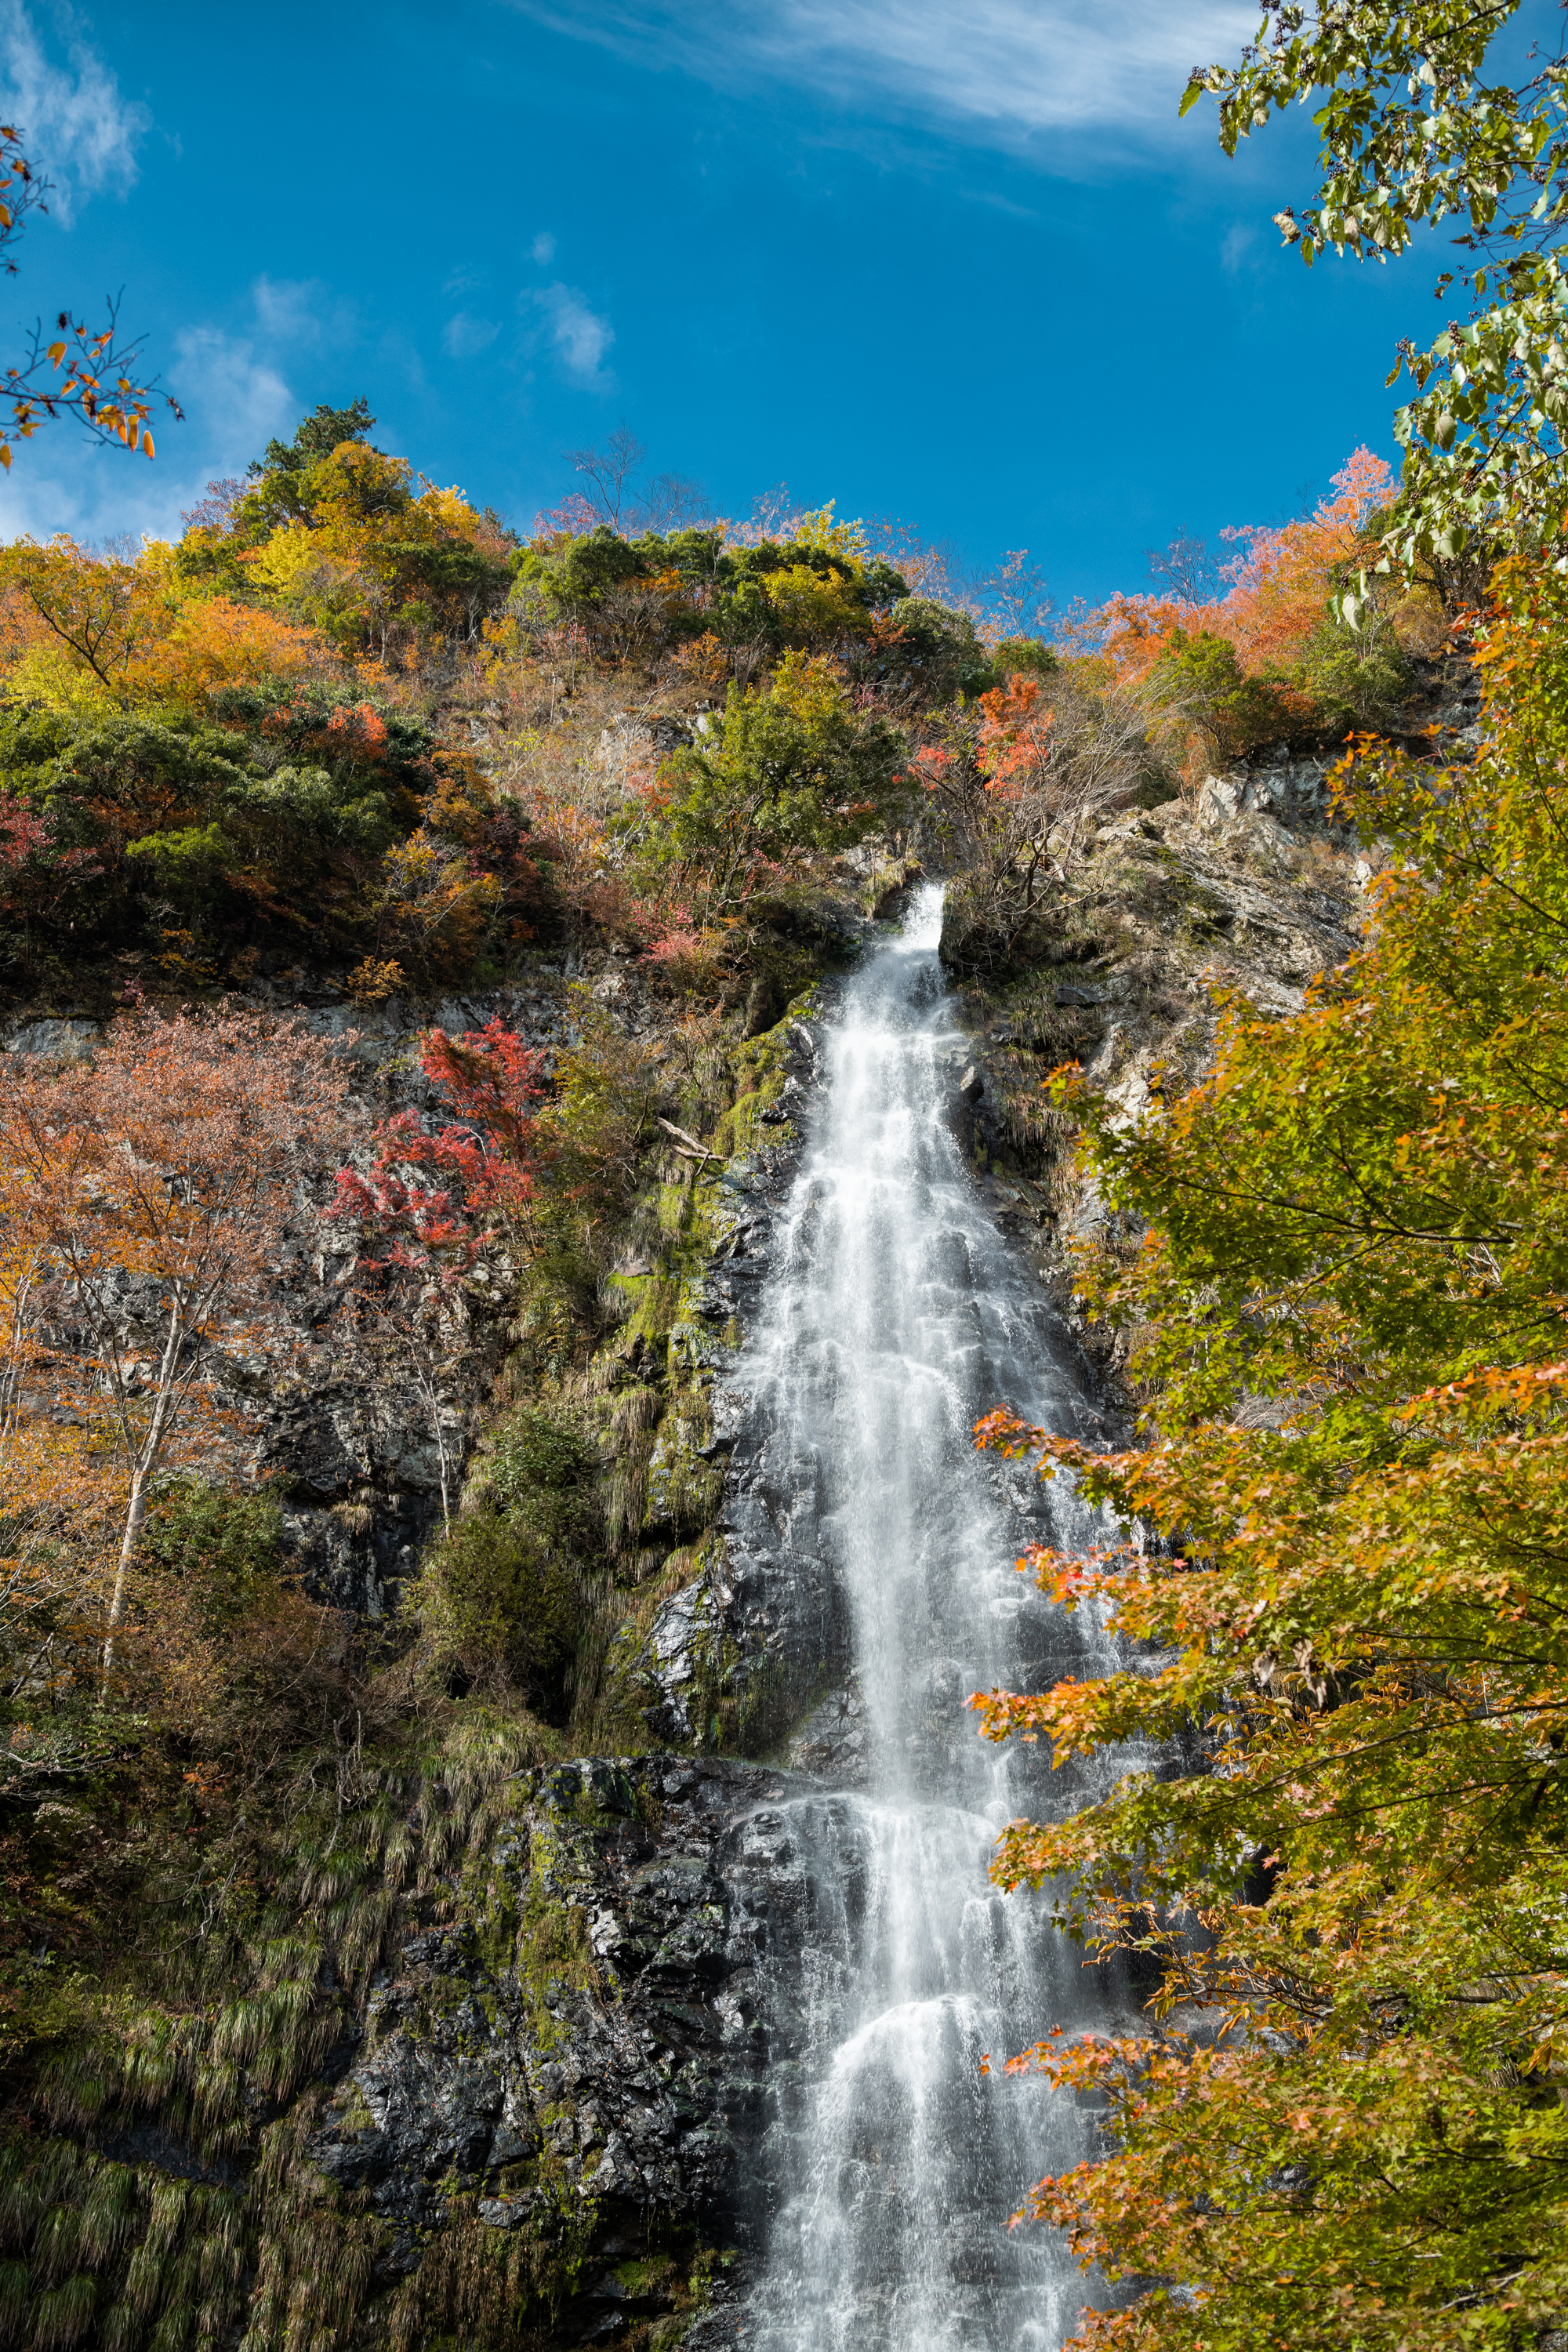 NIKON-CORPORATION_NIKON-D850_2481315314-2481435620_19899 兵庫県  天滝 (兵庫県一の落差を誇る紅葉景色の美しい絶景の滝 !撮影した写真の紹介、 アクセス情報や撮影ポイントなど!)　